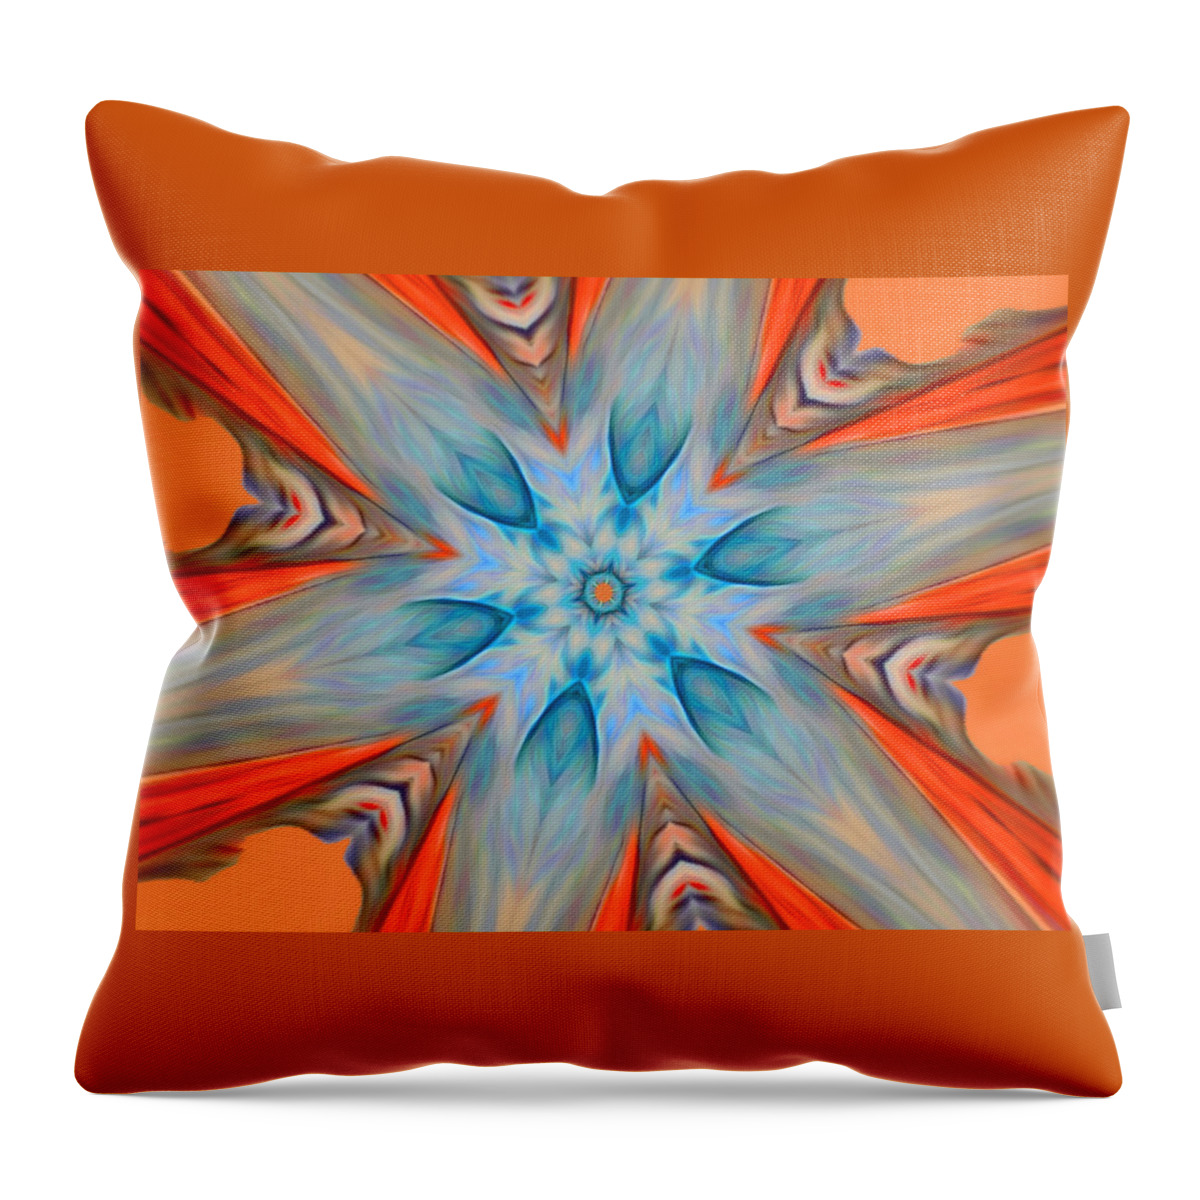 Digital Throw Pillow featuring the digital art Flower Burst Abstract by Ronald Mills